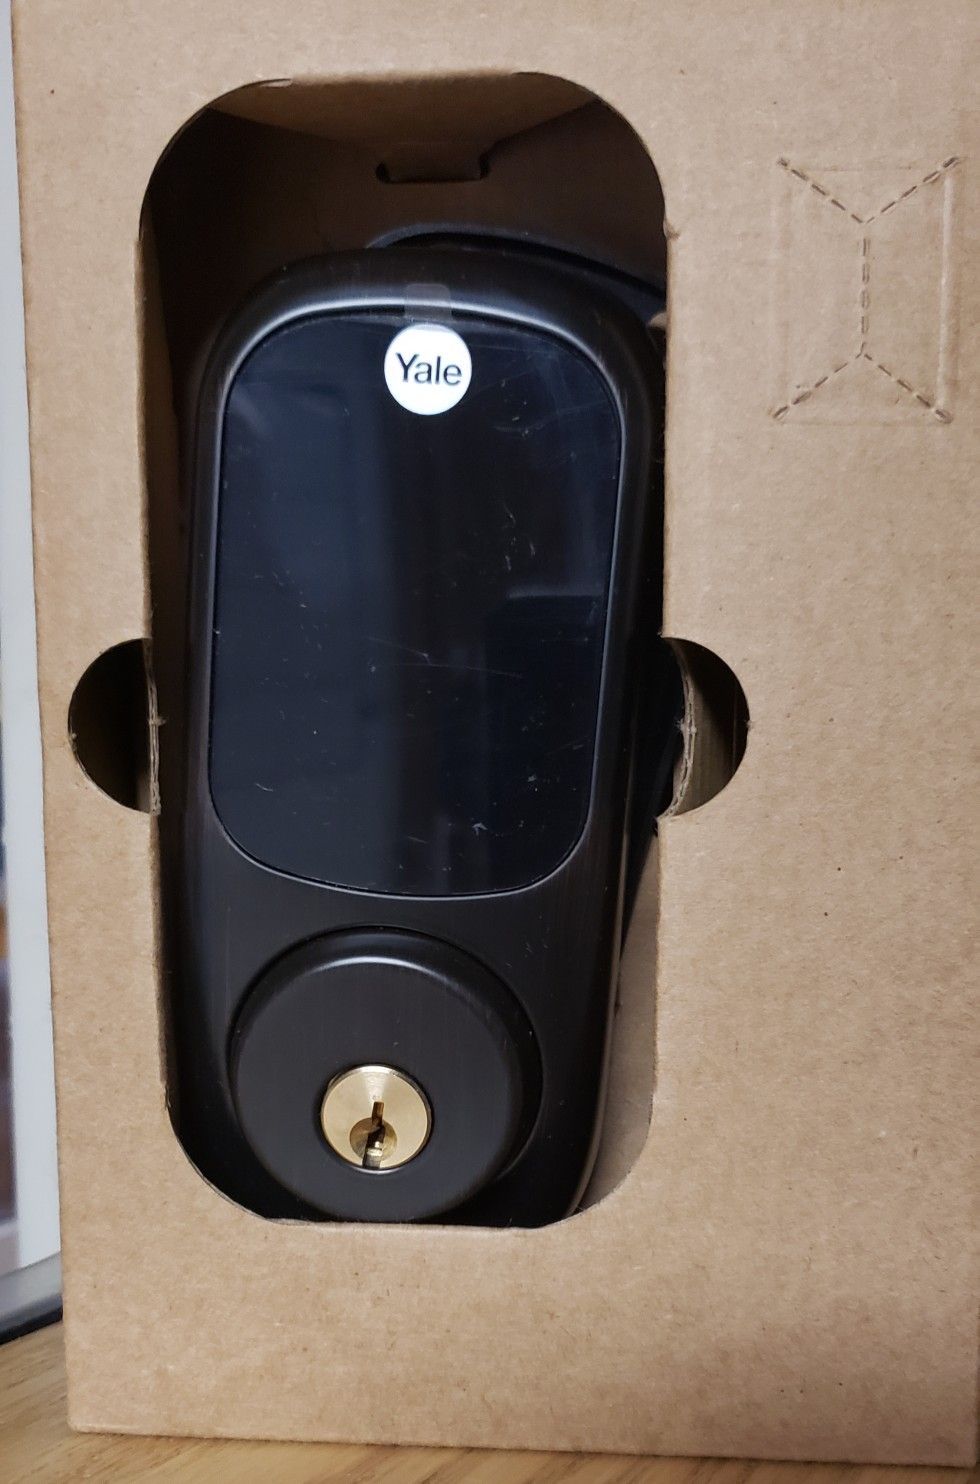 Yale door lock - Deadbolt - Amazon edition - works with Alexa